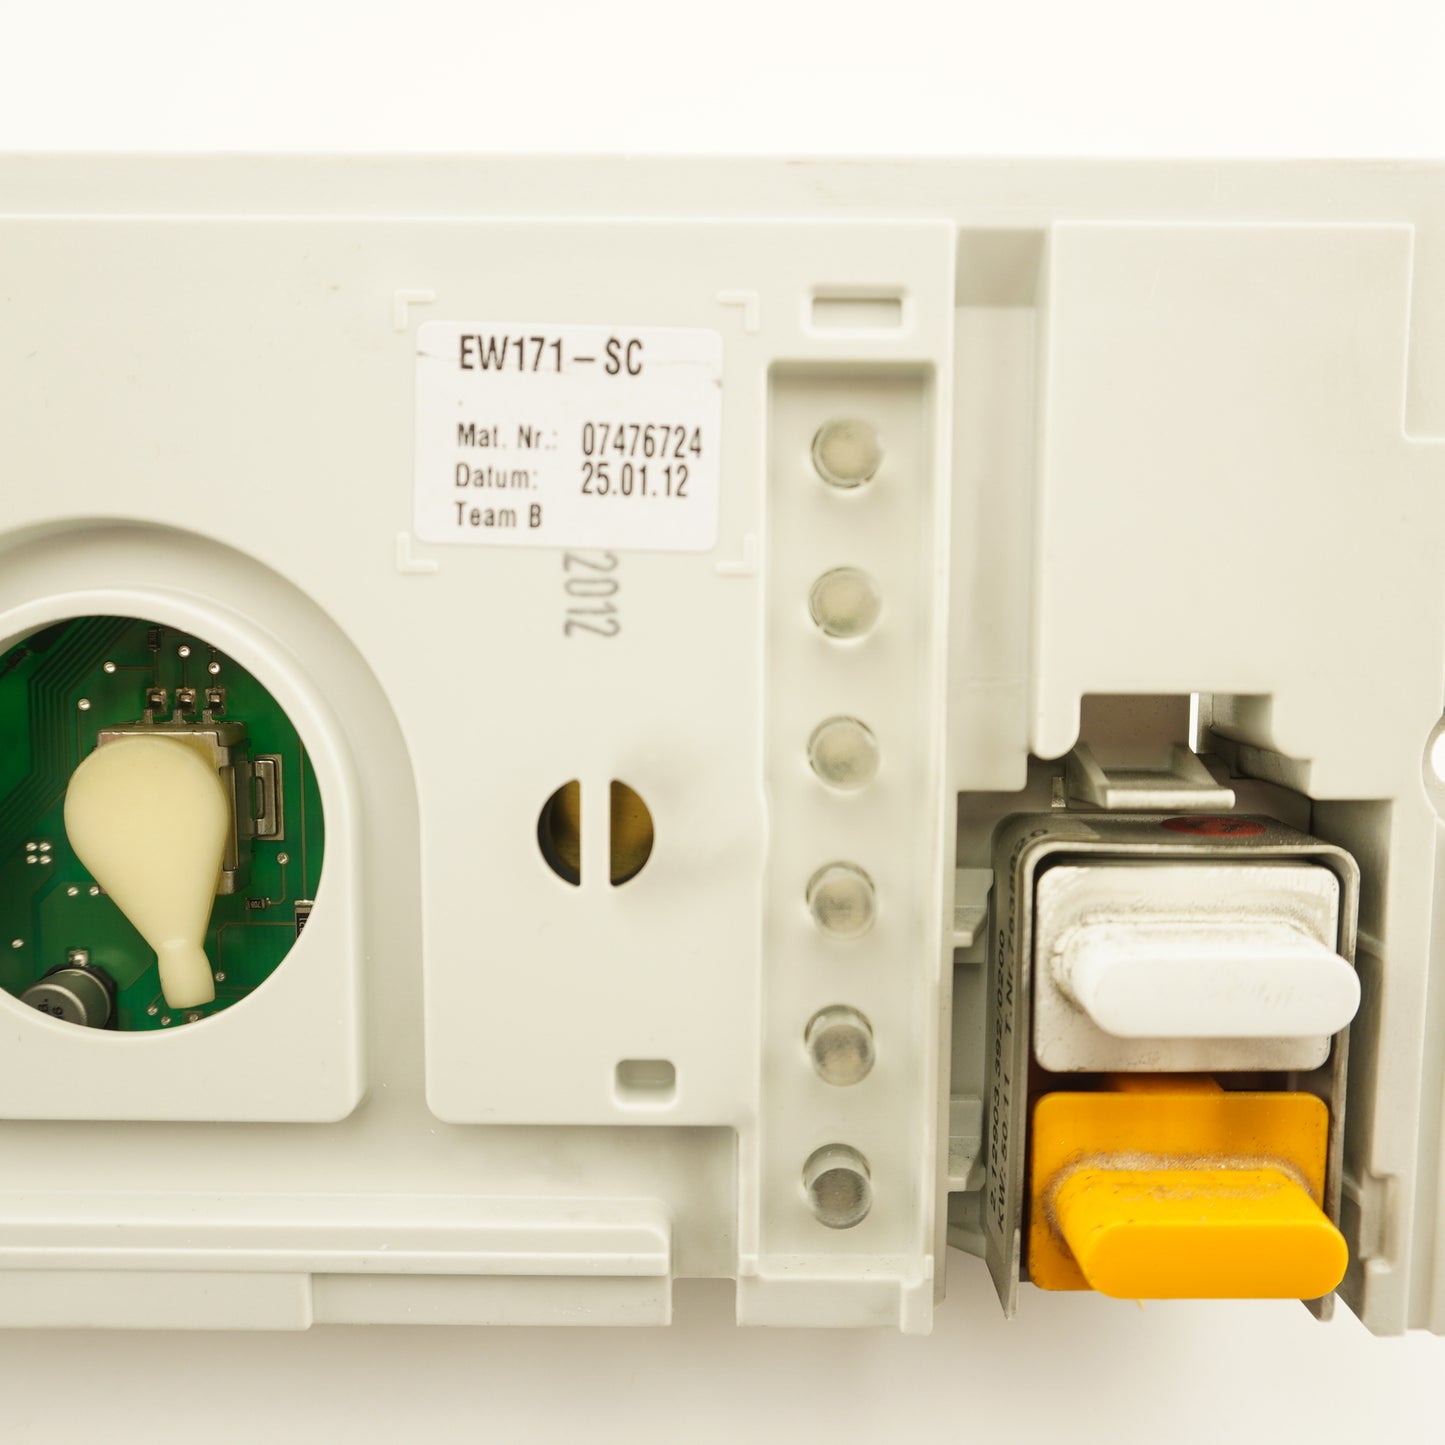 Miele Washing Machine Display Circuit Board, PCB EW171-SC 07476724